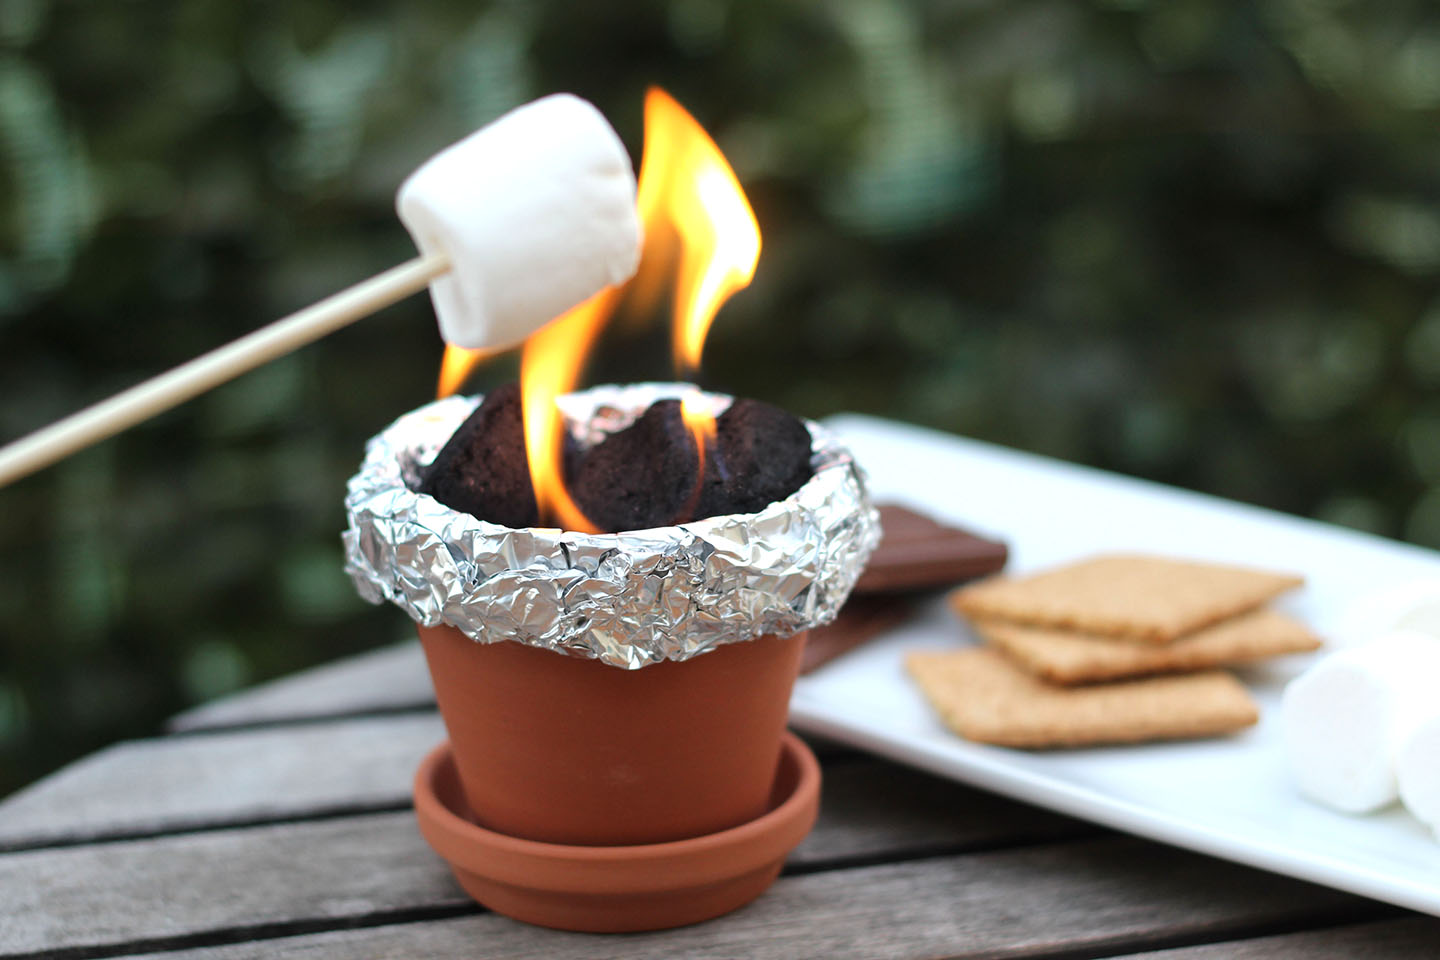 Pot holder or Oven Mitt Cute and fun! Smores Campfire Design